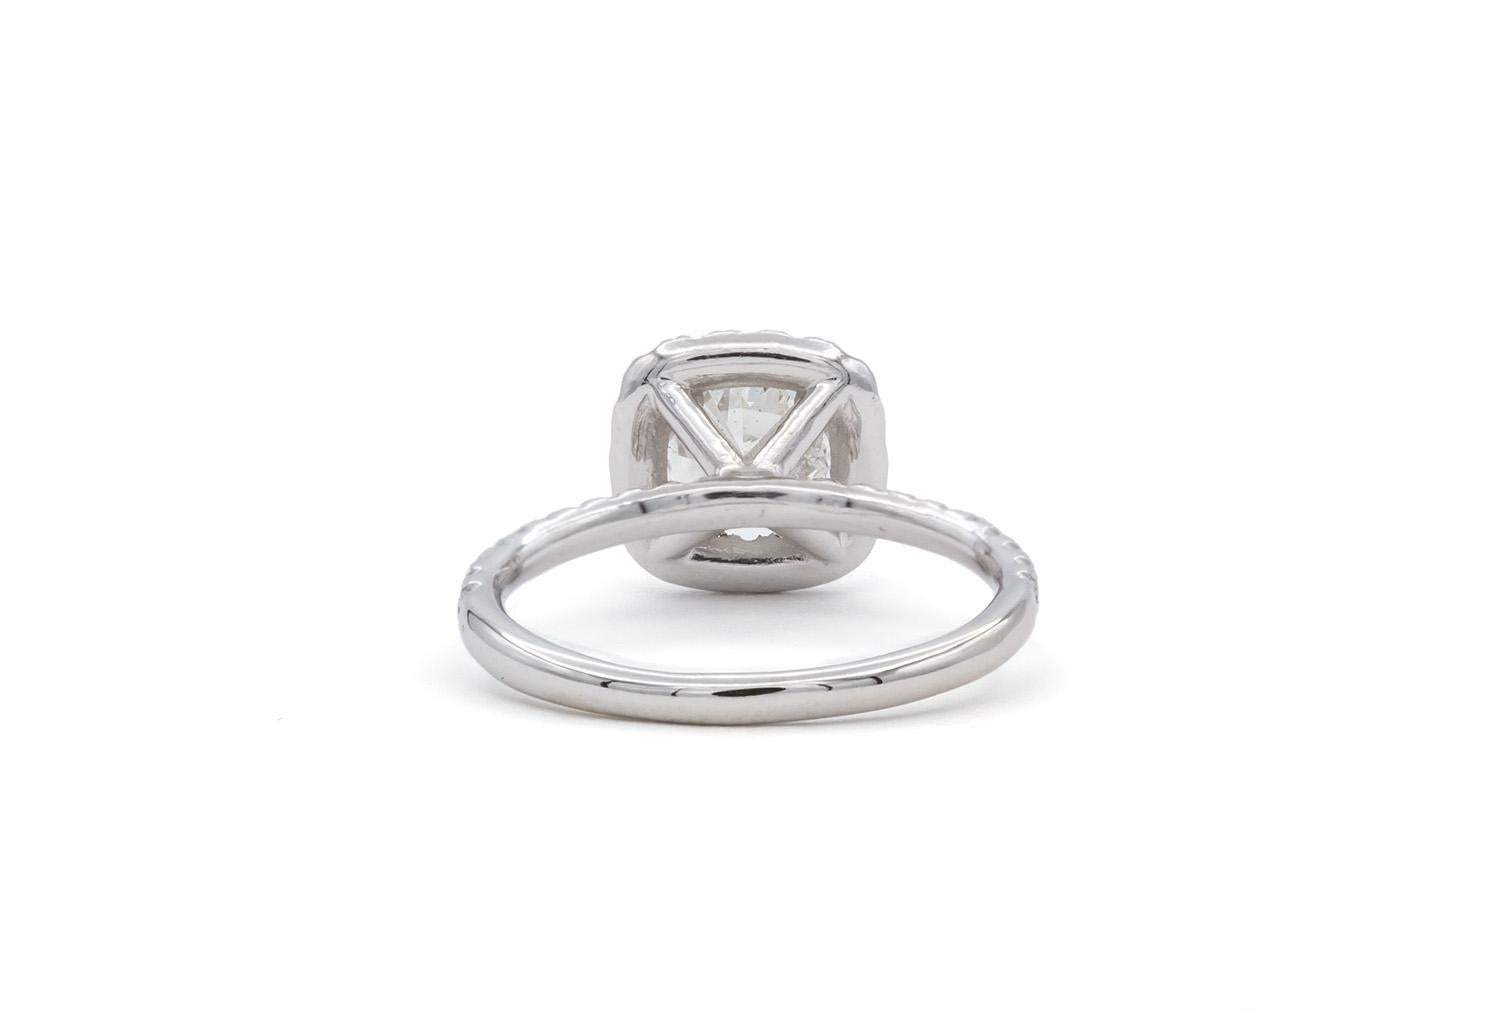 1 carat cushion cut diamond engagement ring 14k gold halo design